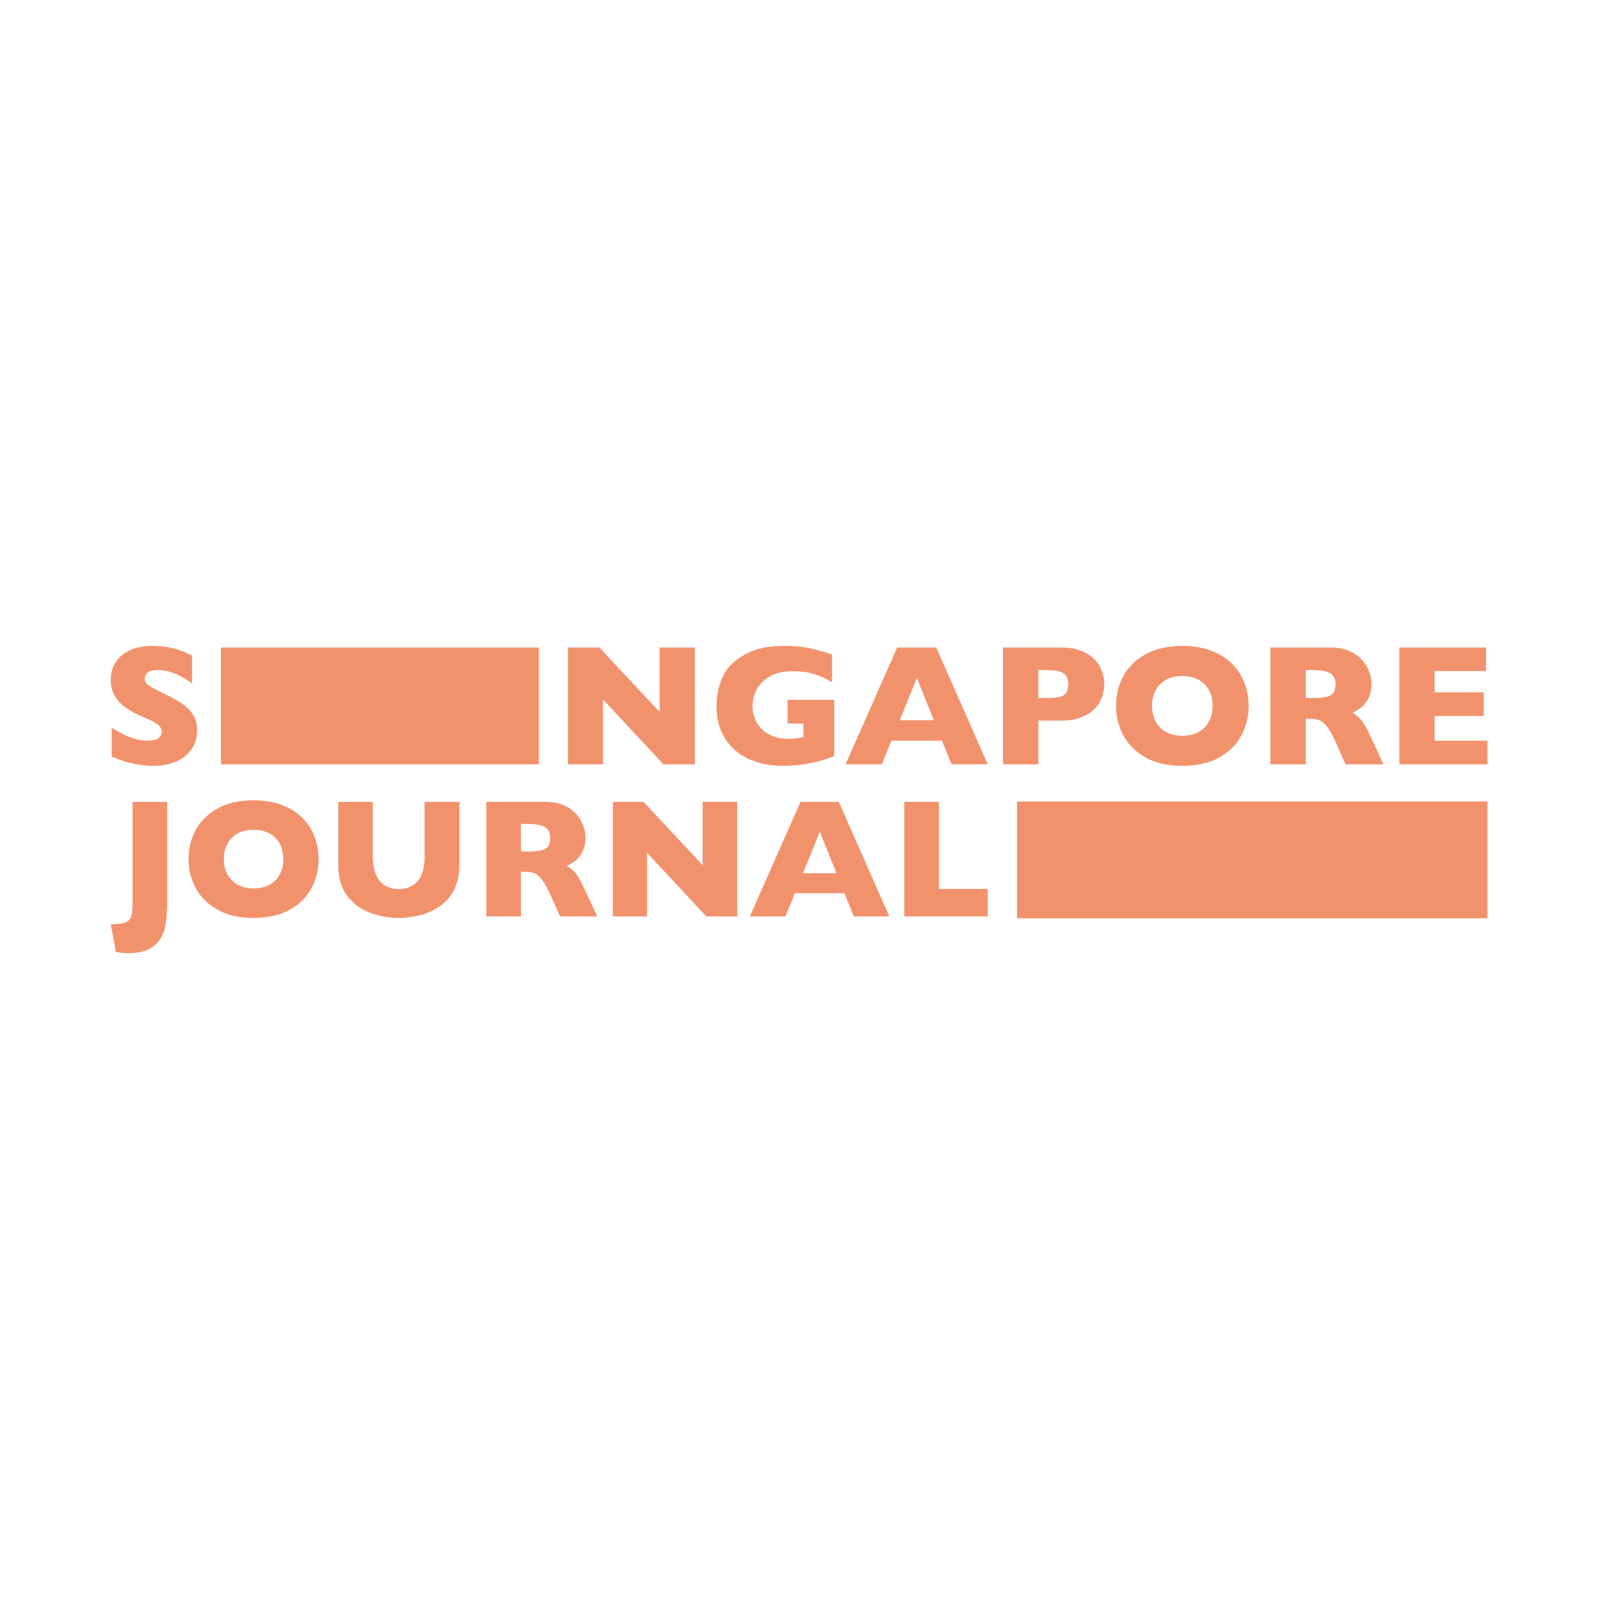 Singapore Journal